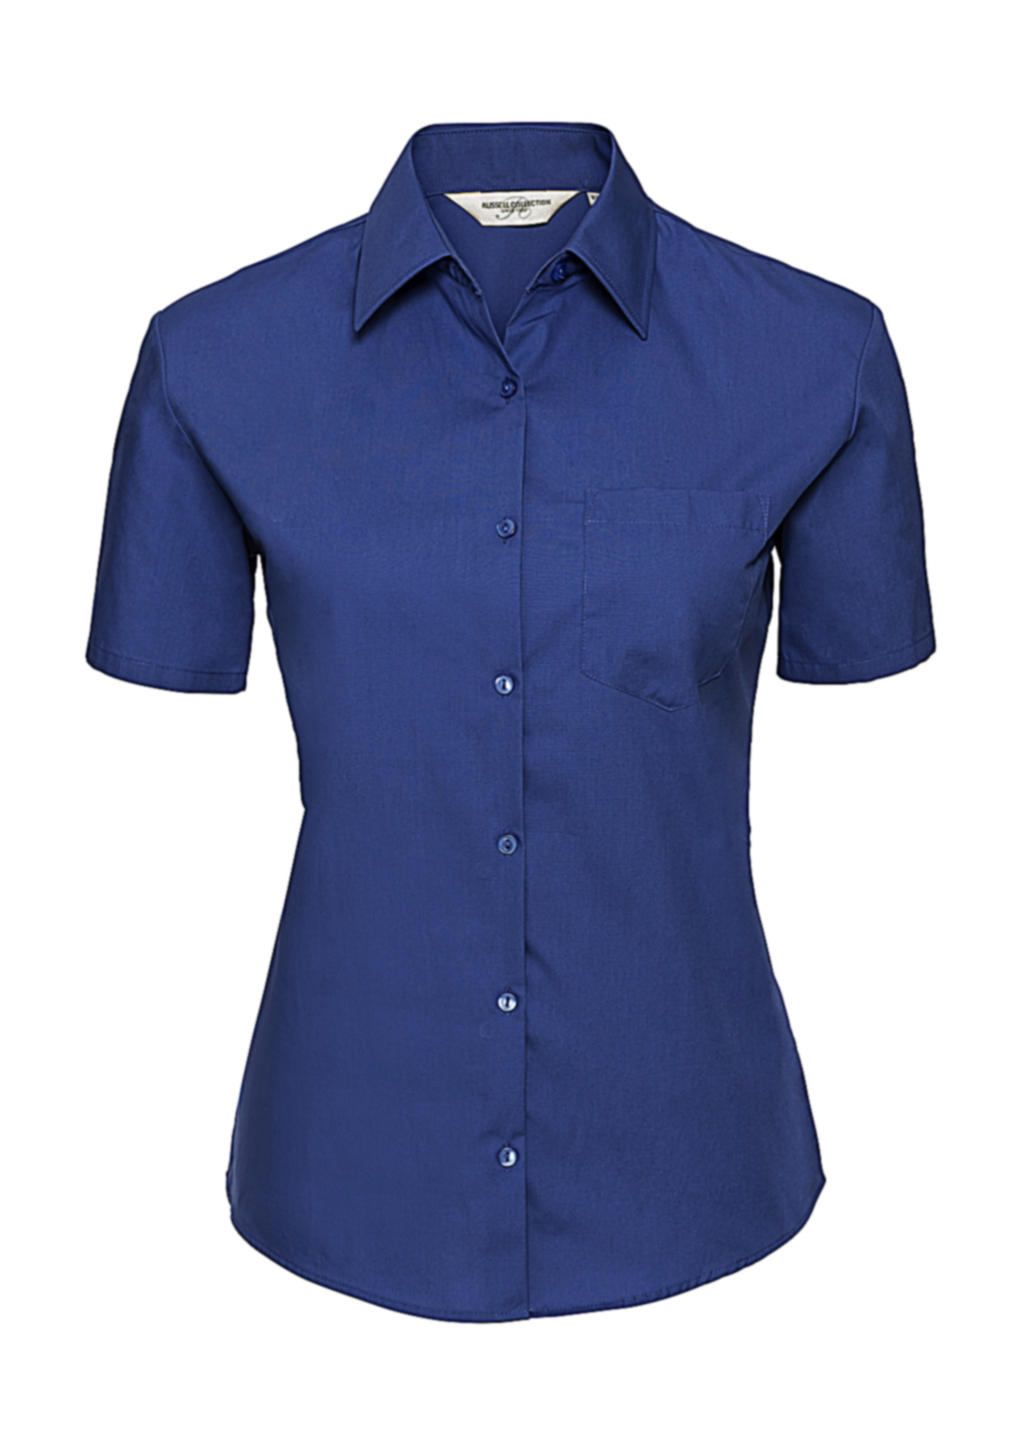  Ladies Cotton Poplin Shirt in Farbe Aztec Blue